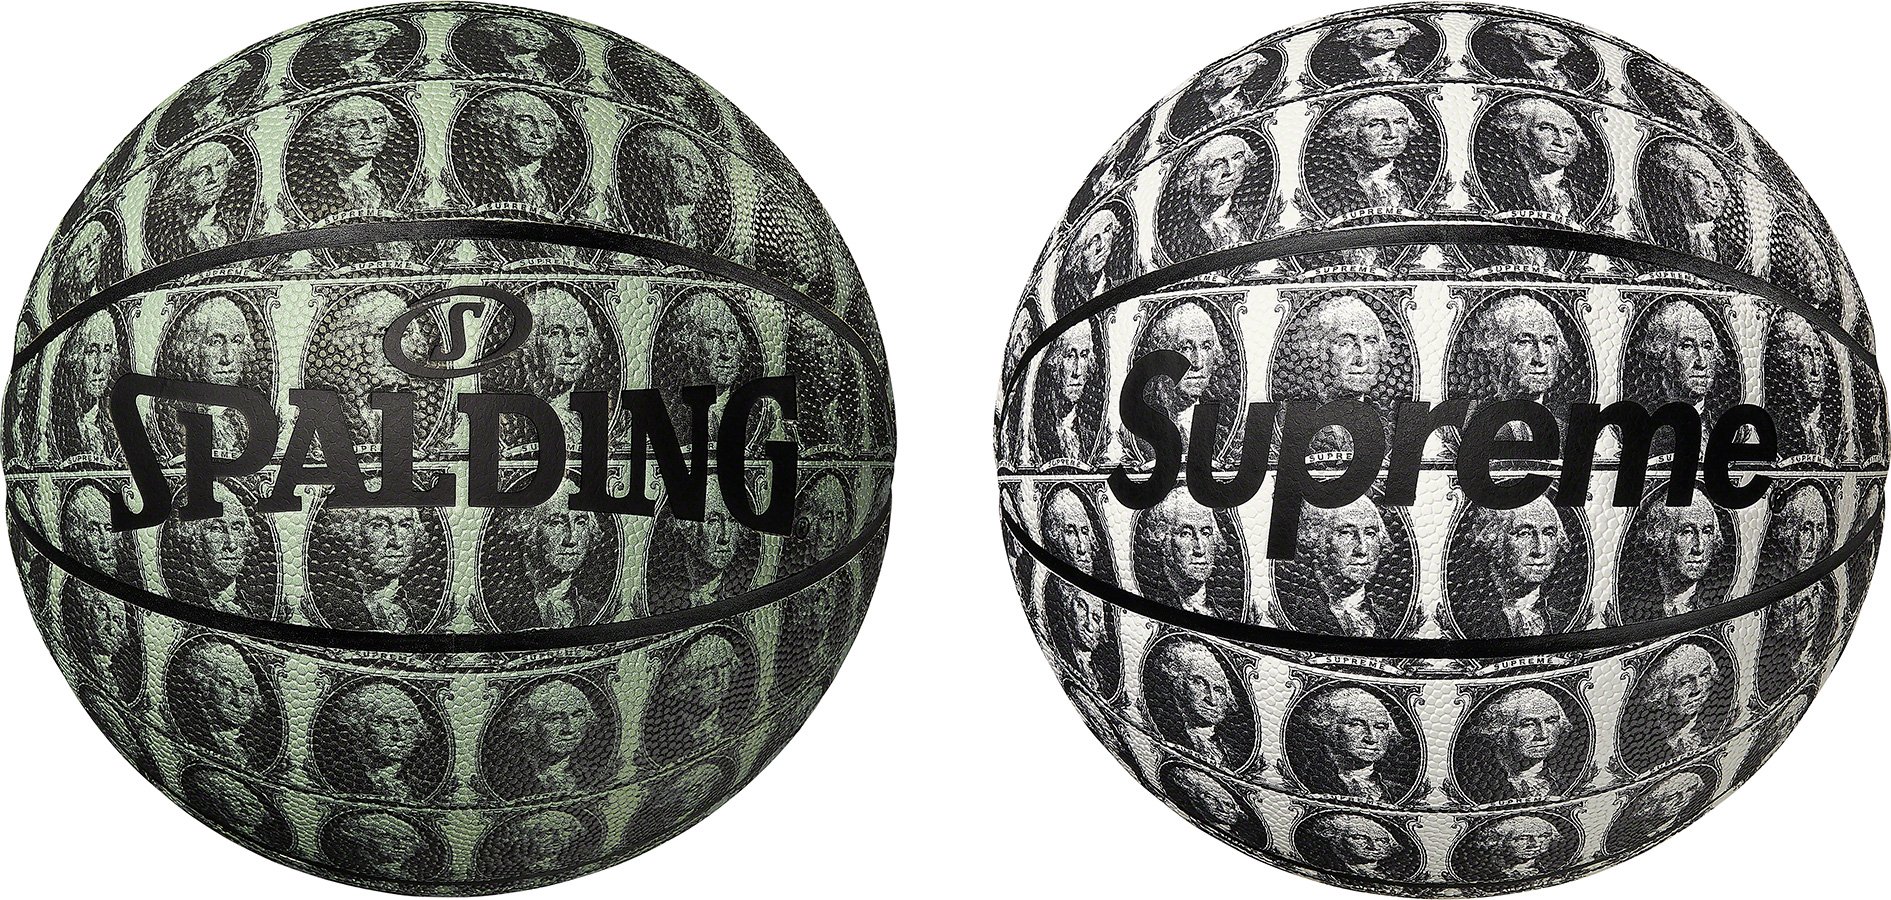 Supreme®/Spalding® Washington Basketball - Supreme Community